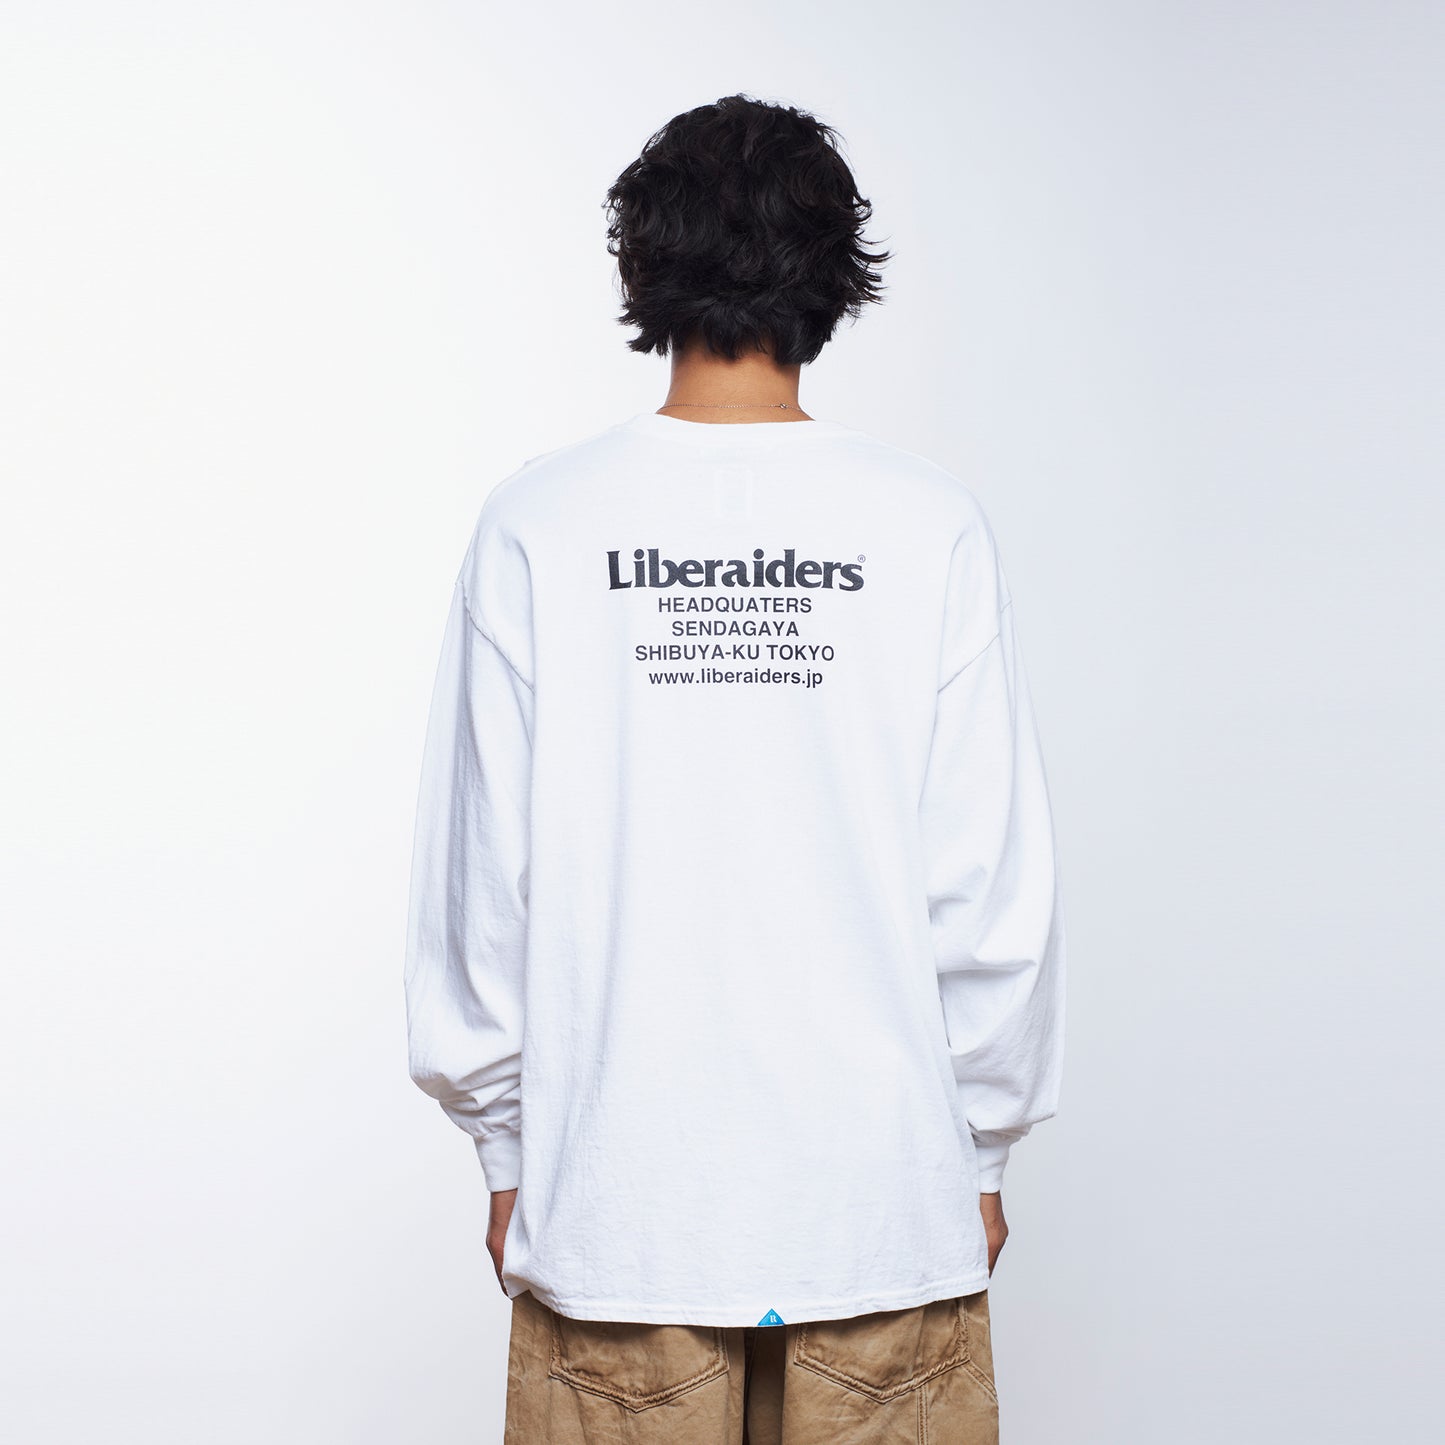 Liberaiders ®(リベレイダース) /HEADQUATERS L/S TEE 70504 / WHITE